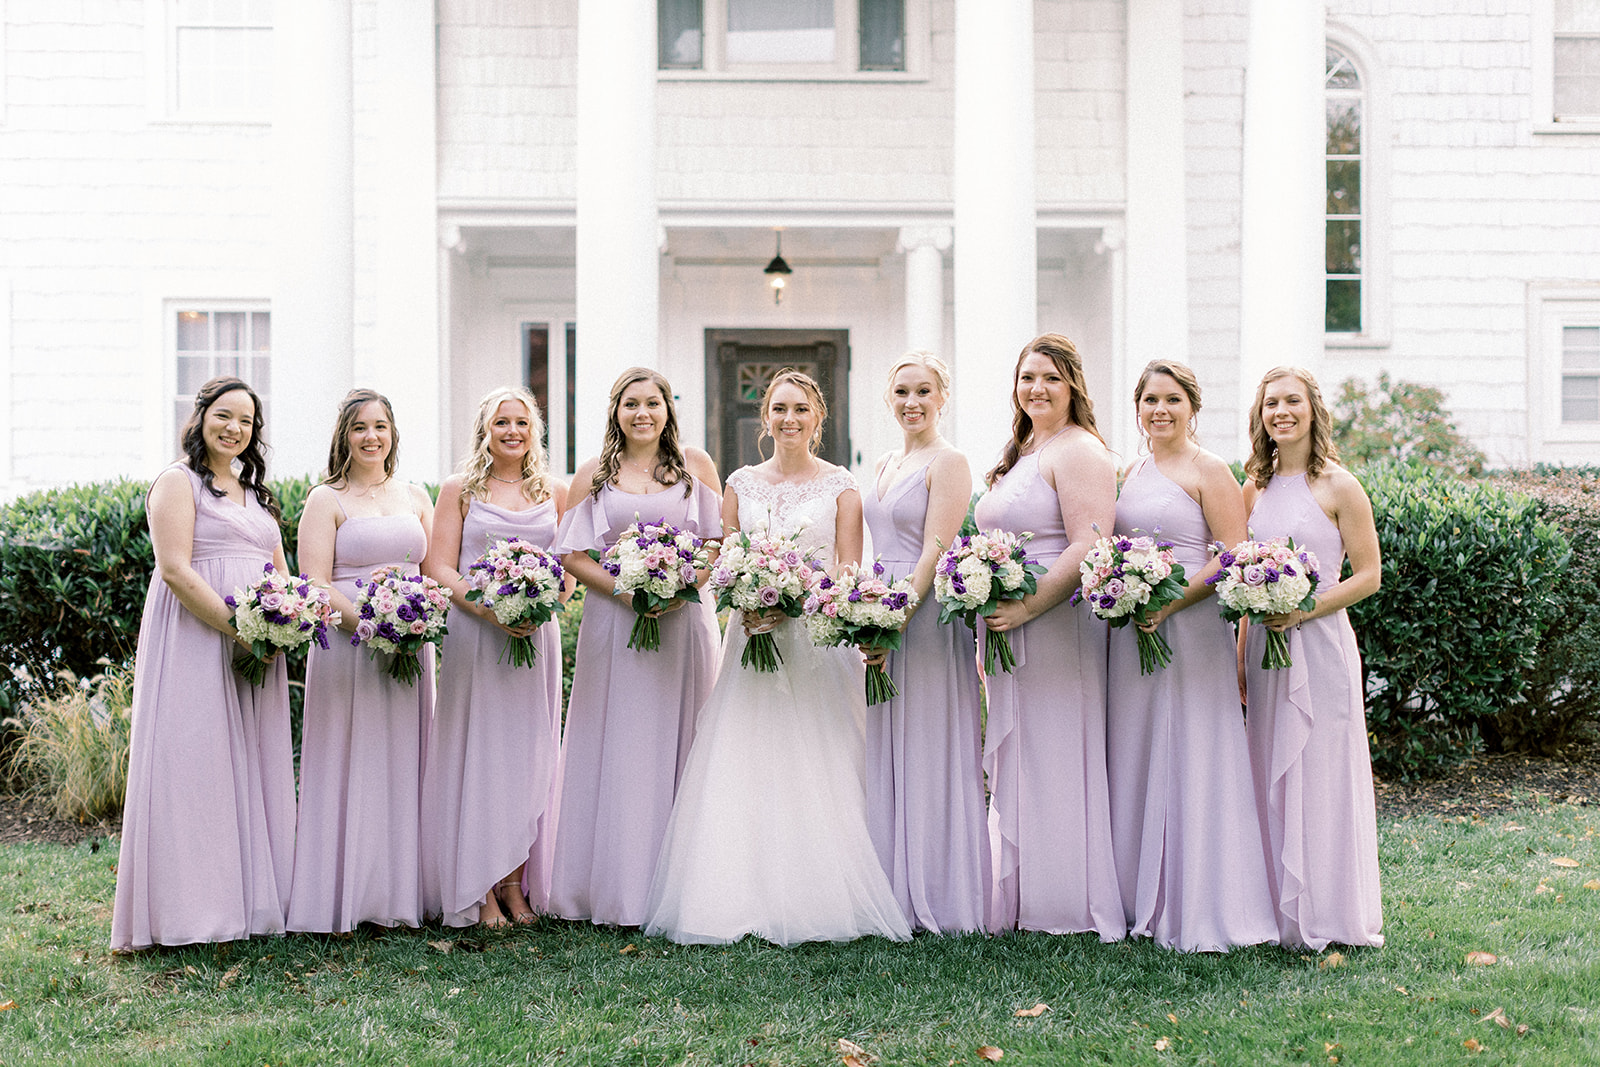 Pennsylvania wedding photographer captures bride with bridesmaids wearing purple dresses